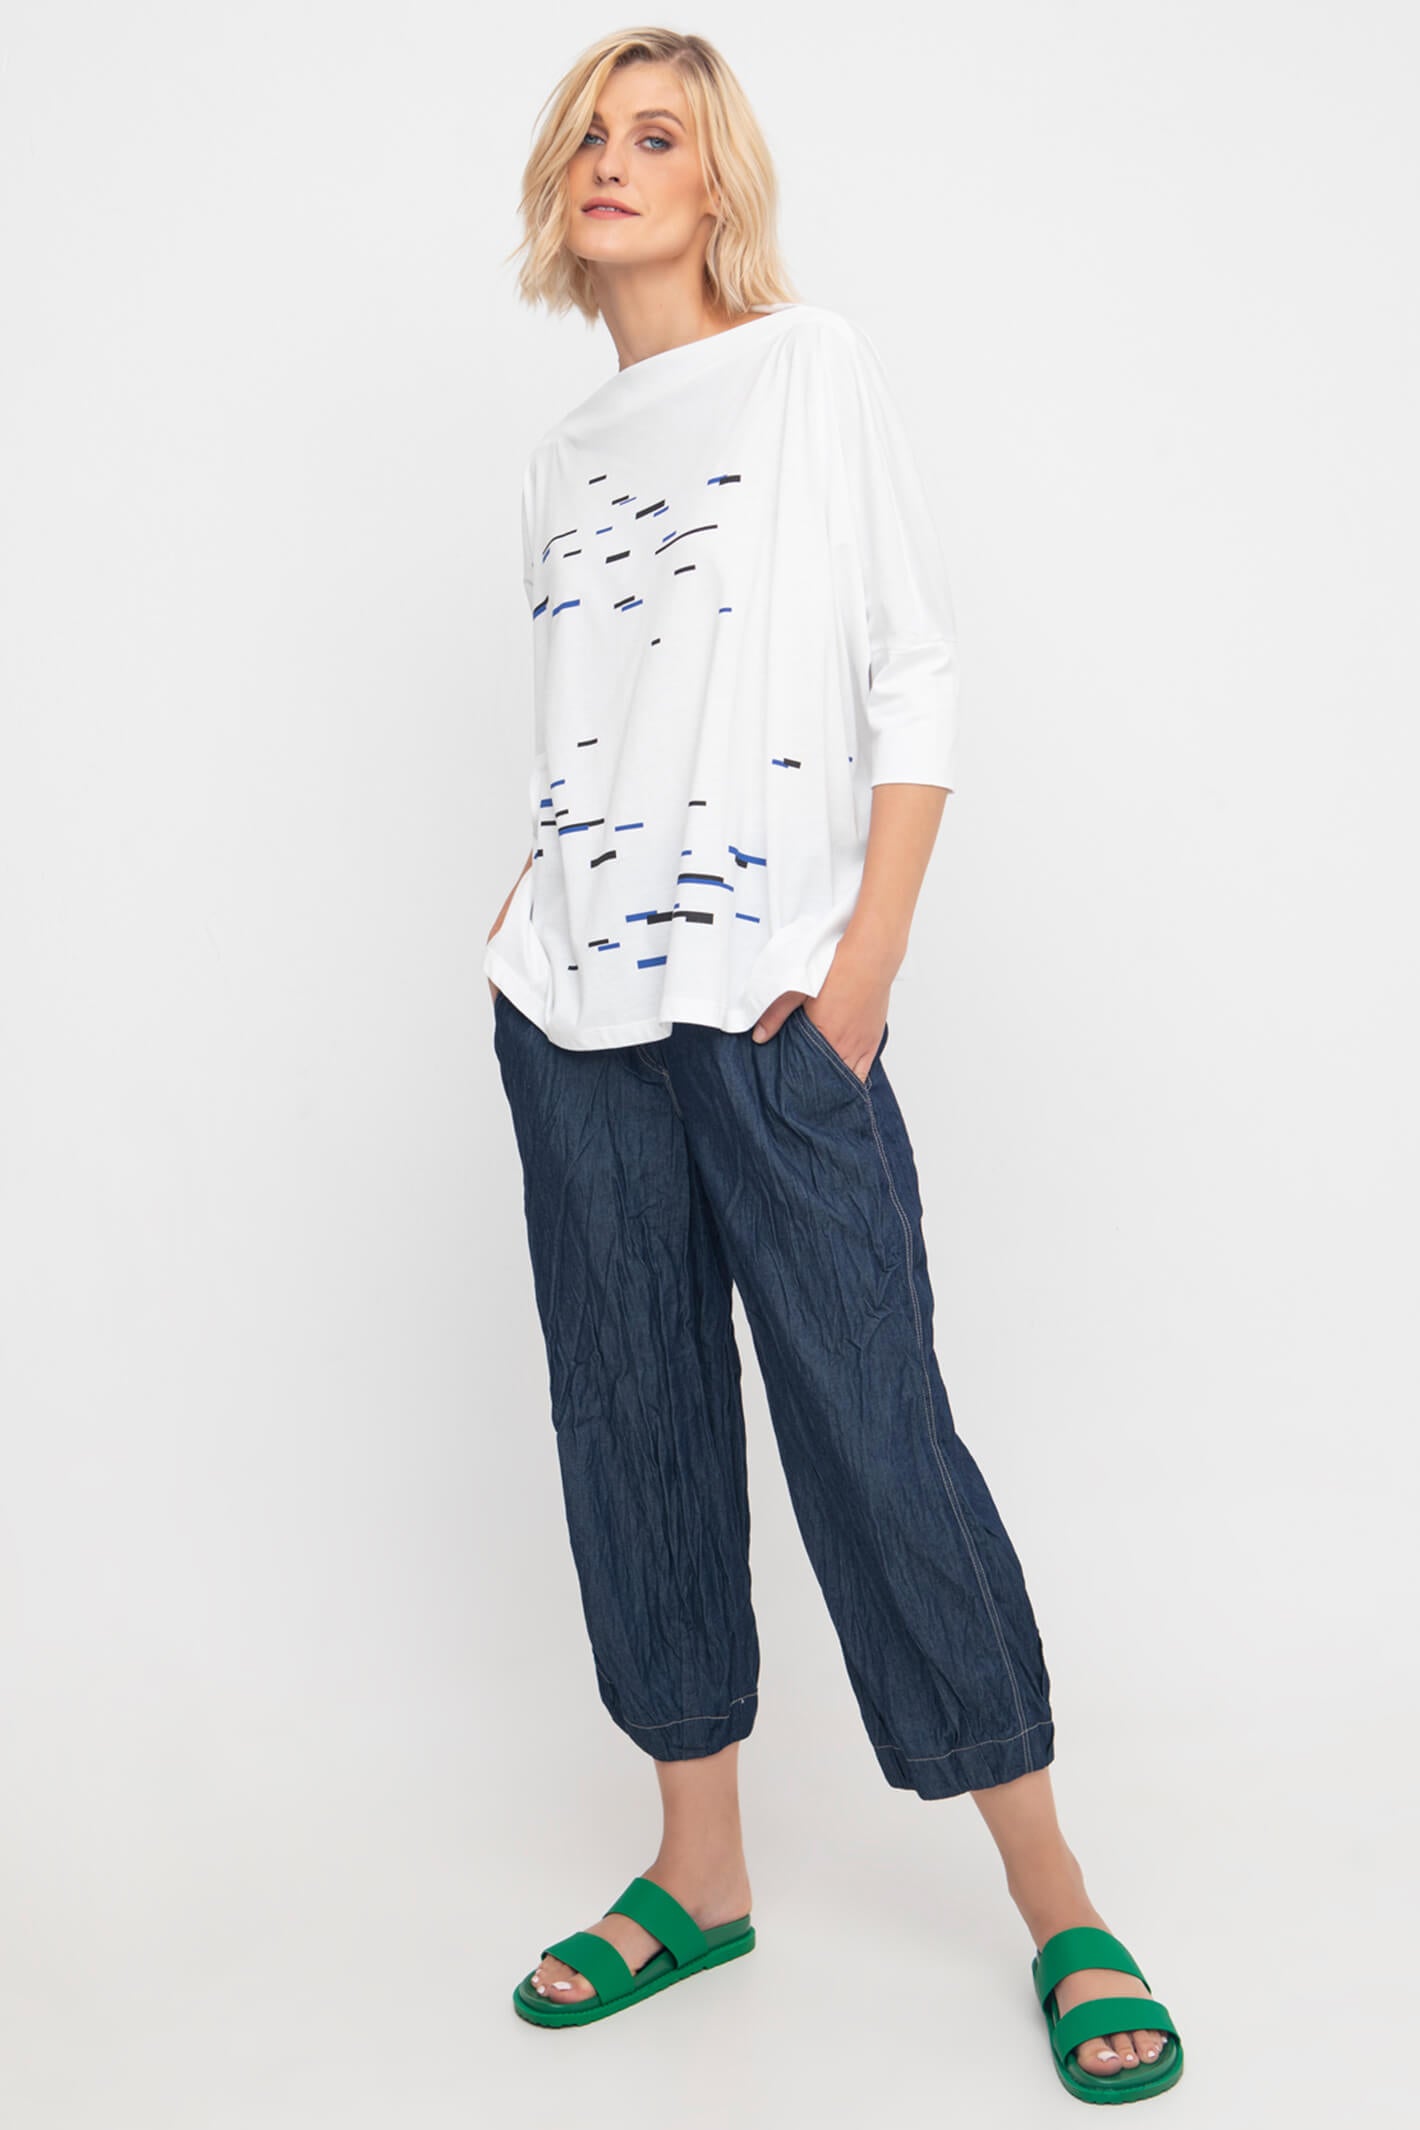 Womens Skinny Stretch Denim Cropped Jeans Ladies Capri Crop 3/4 Length  Trousers | eBay